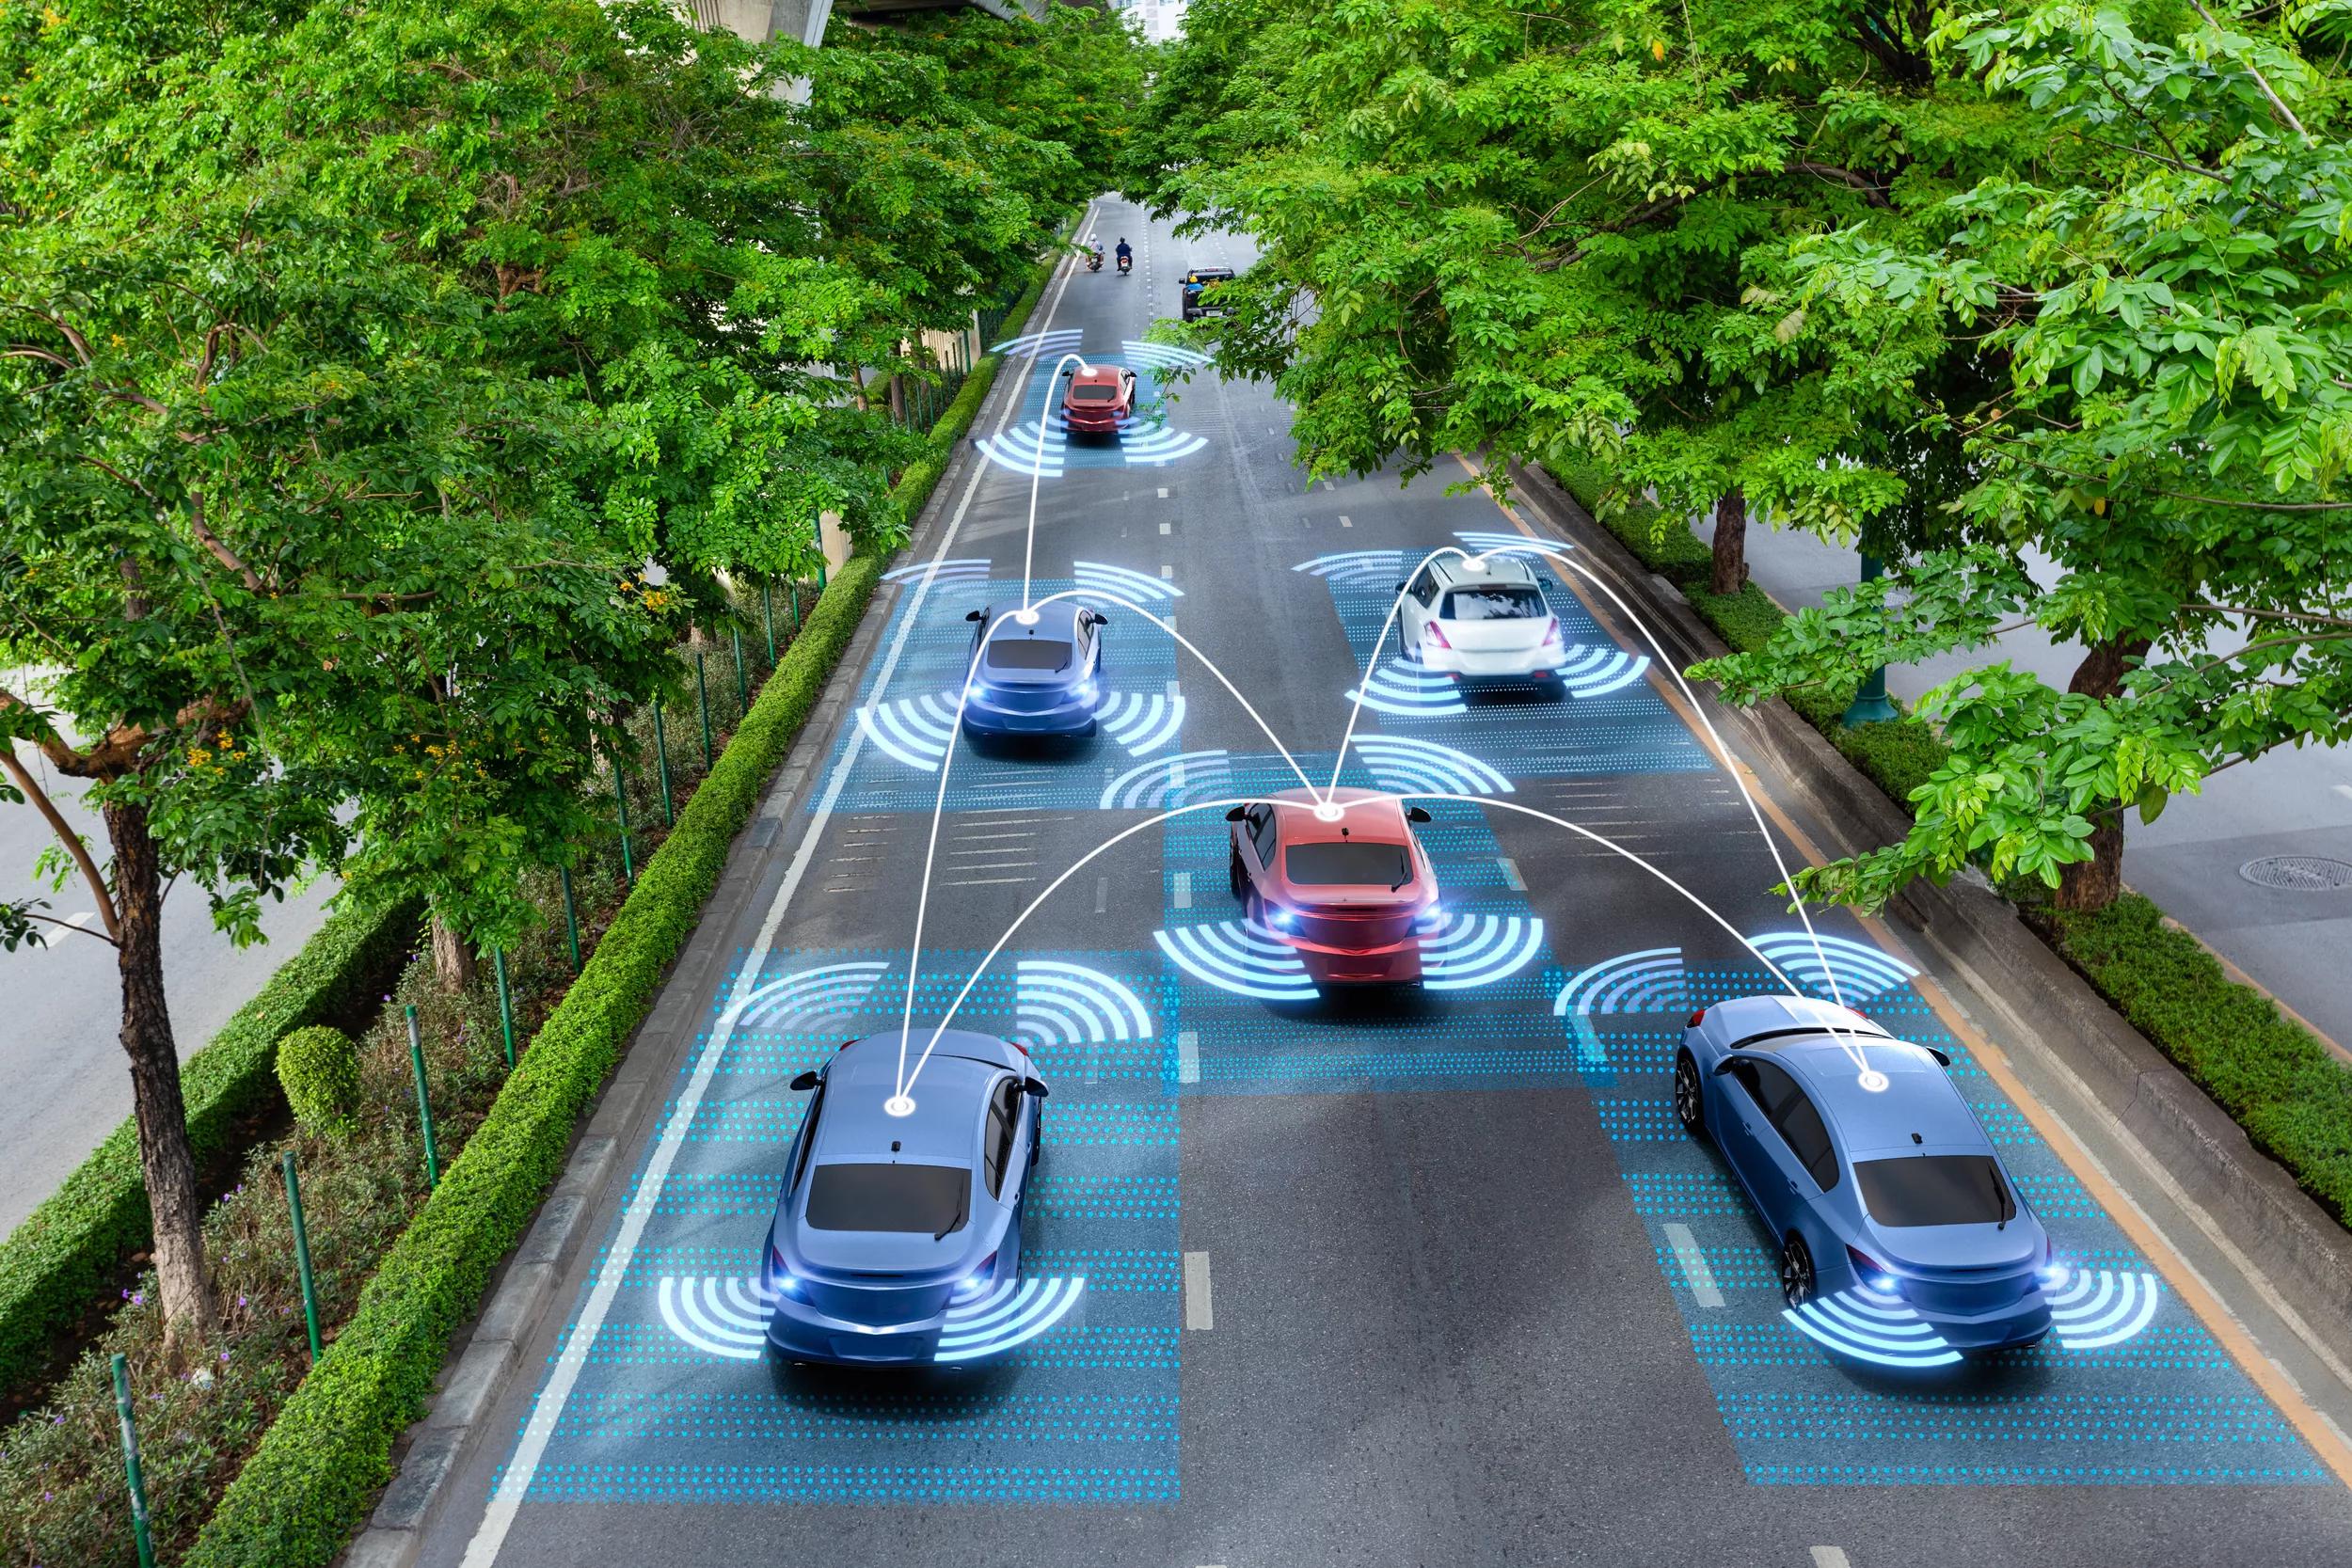 autonomous vehicles in the street